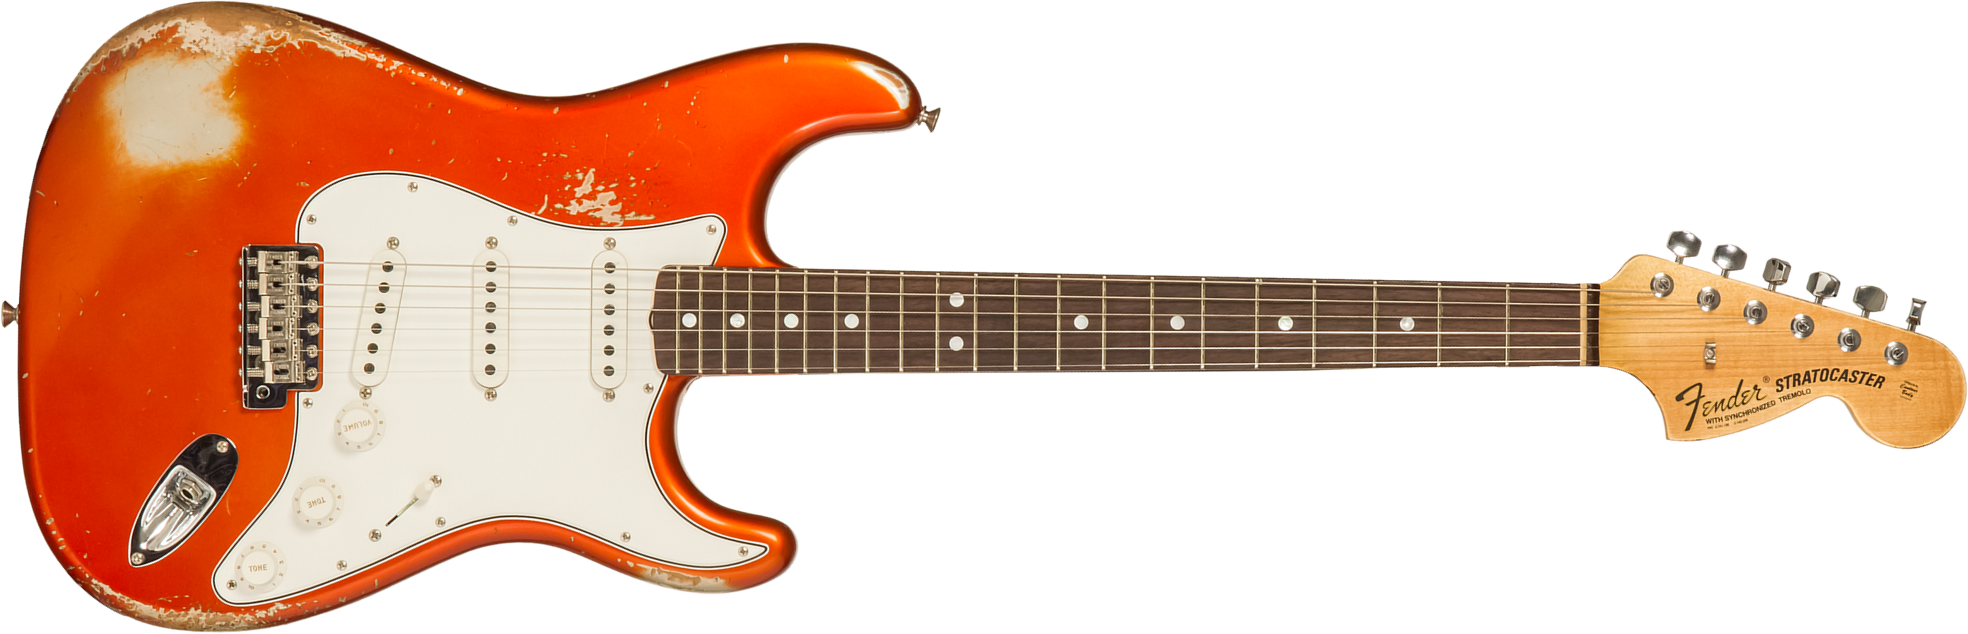 Fender Custom Shop Strat 1969 3s Trem Rw #r132166 - Heavy Relic Candy Tangerine - Str shape electric guitar - Main picture